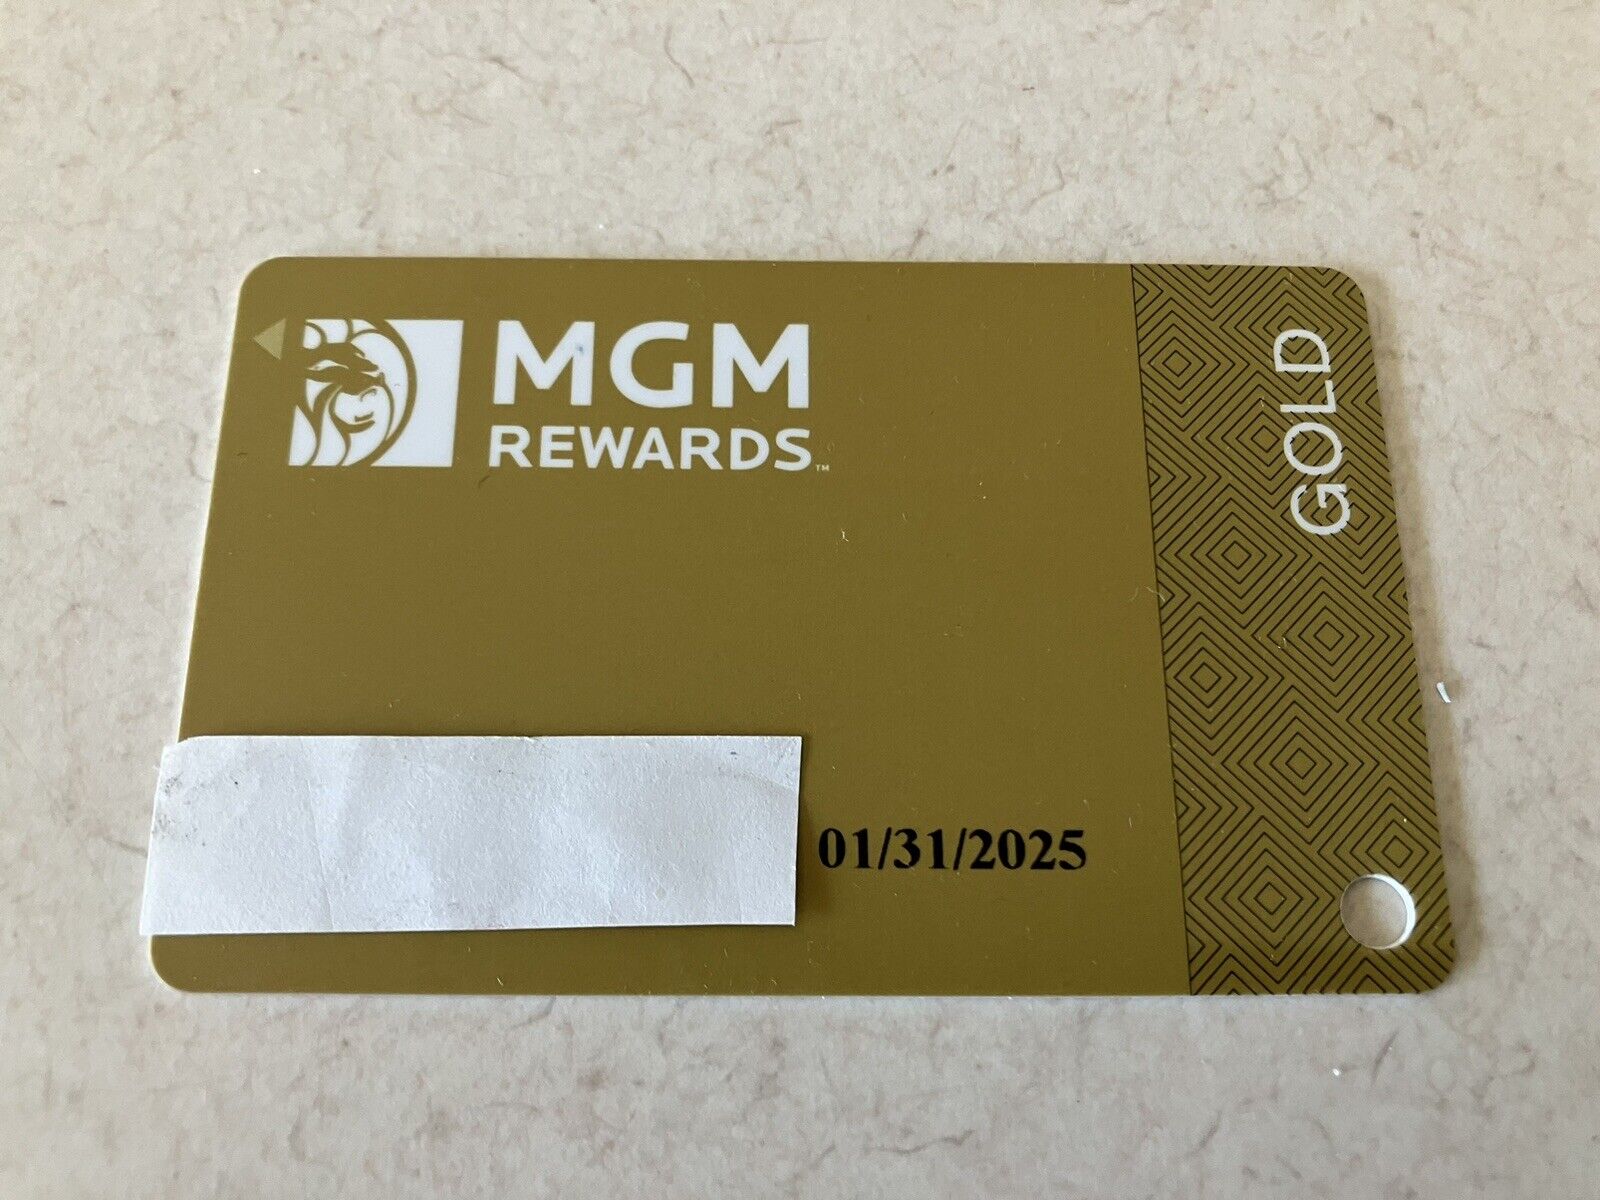 MLIFE MGM REWARDS GOLD SLOT PLAYERS CLUB CARD MALE NAME 2025 EXPIRATION